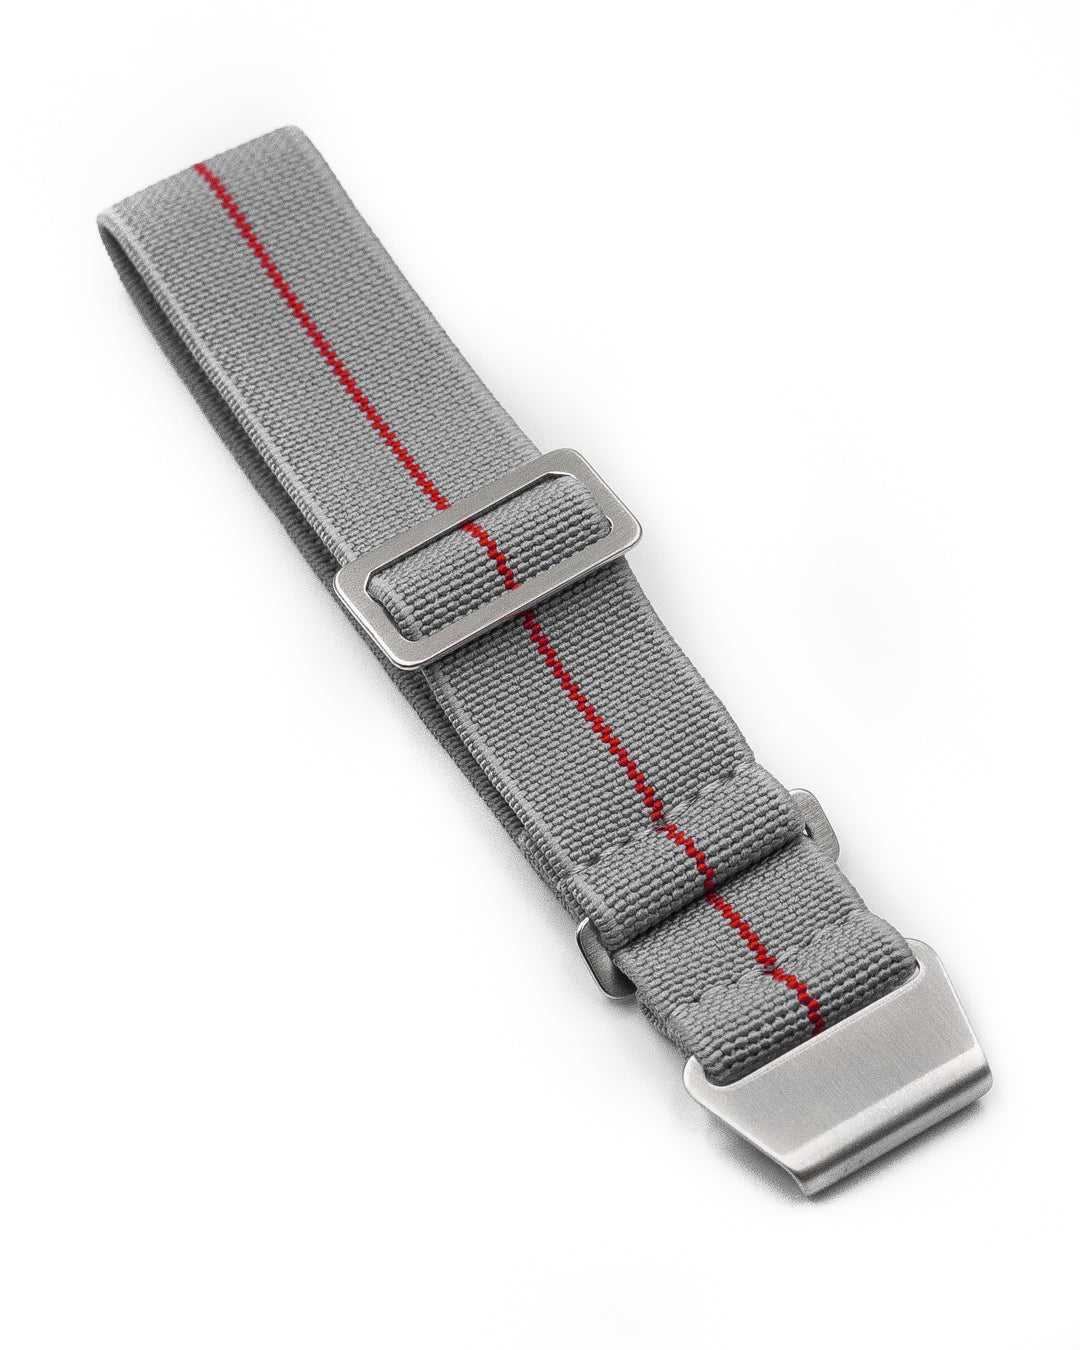 PARA Elastic - Grey with Red Centerline